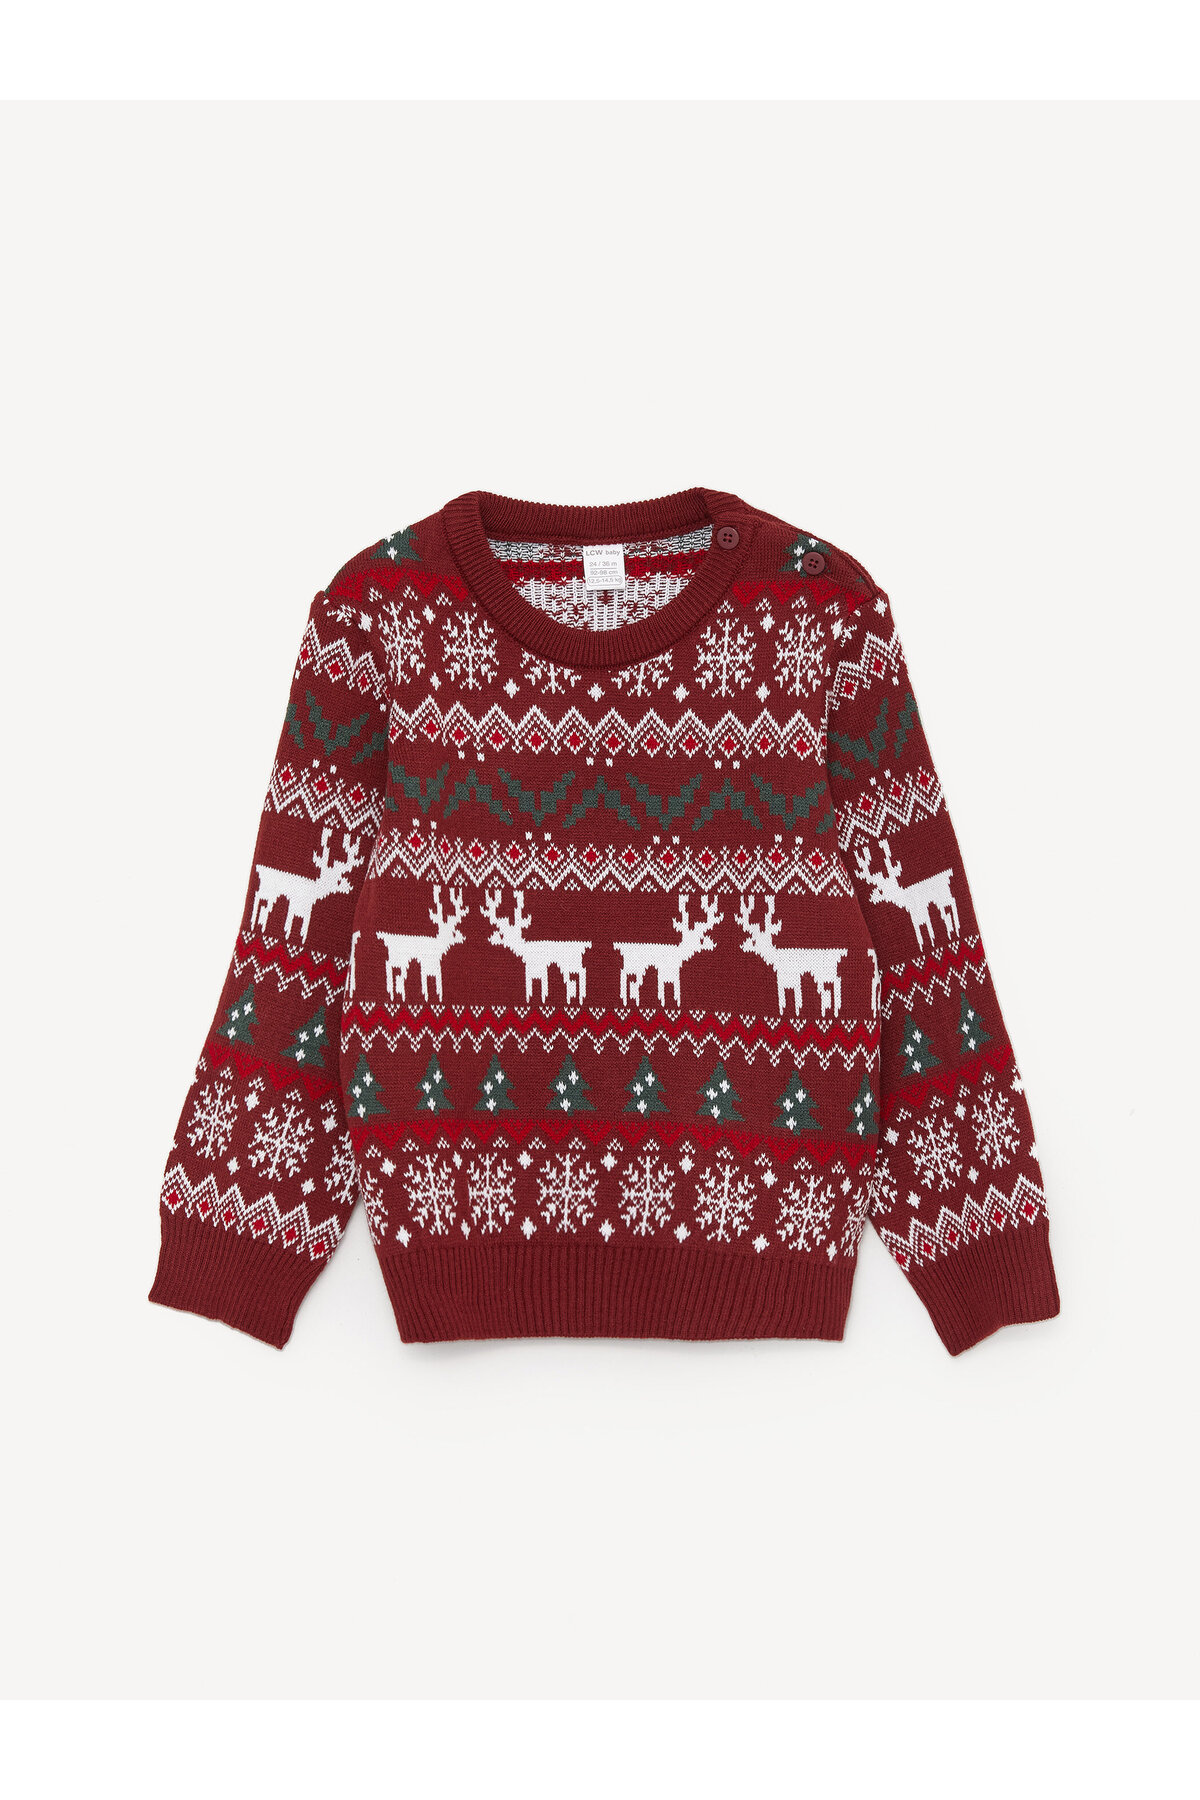 LC Waikiki Crew Neck Long Sleeve Christmas Themed Baby Boy Knitwear Sweater